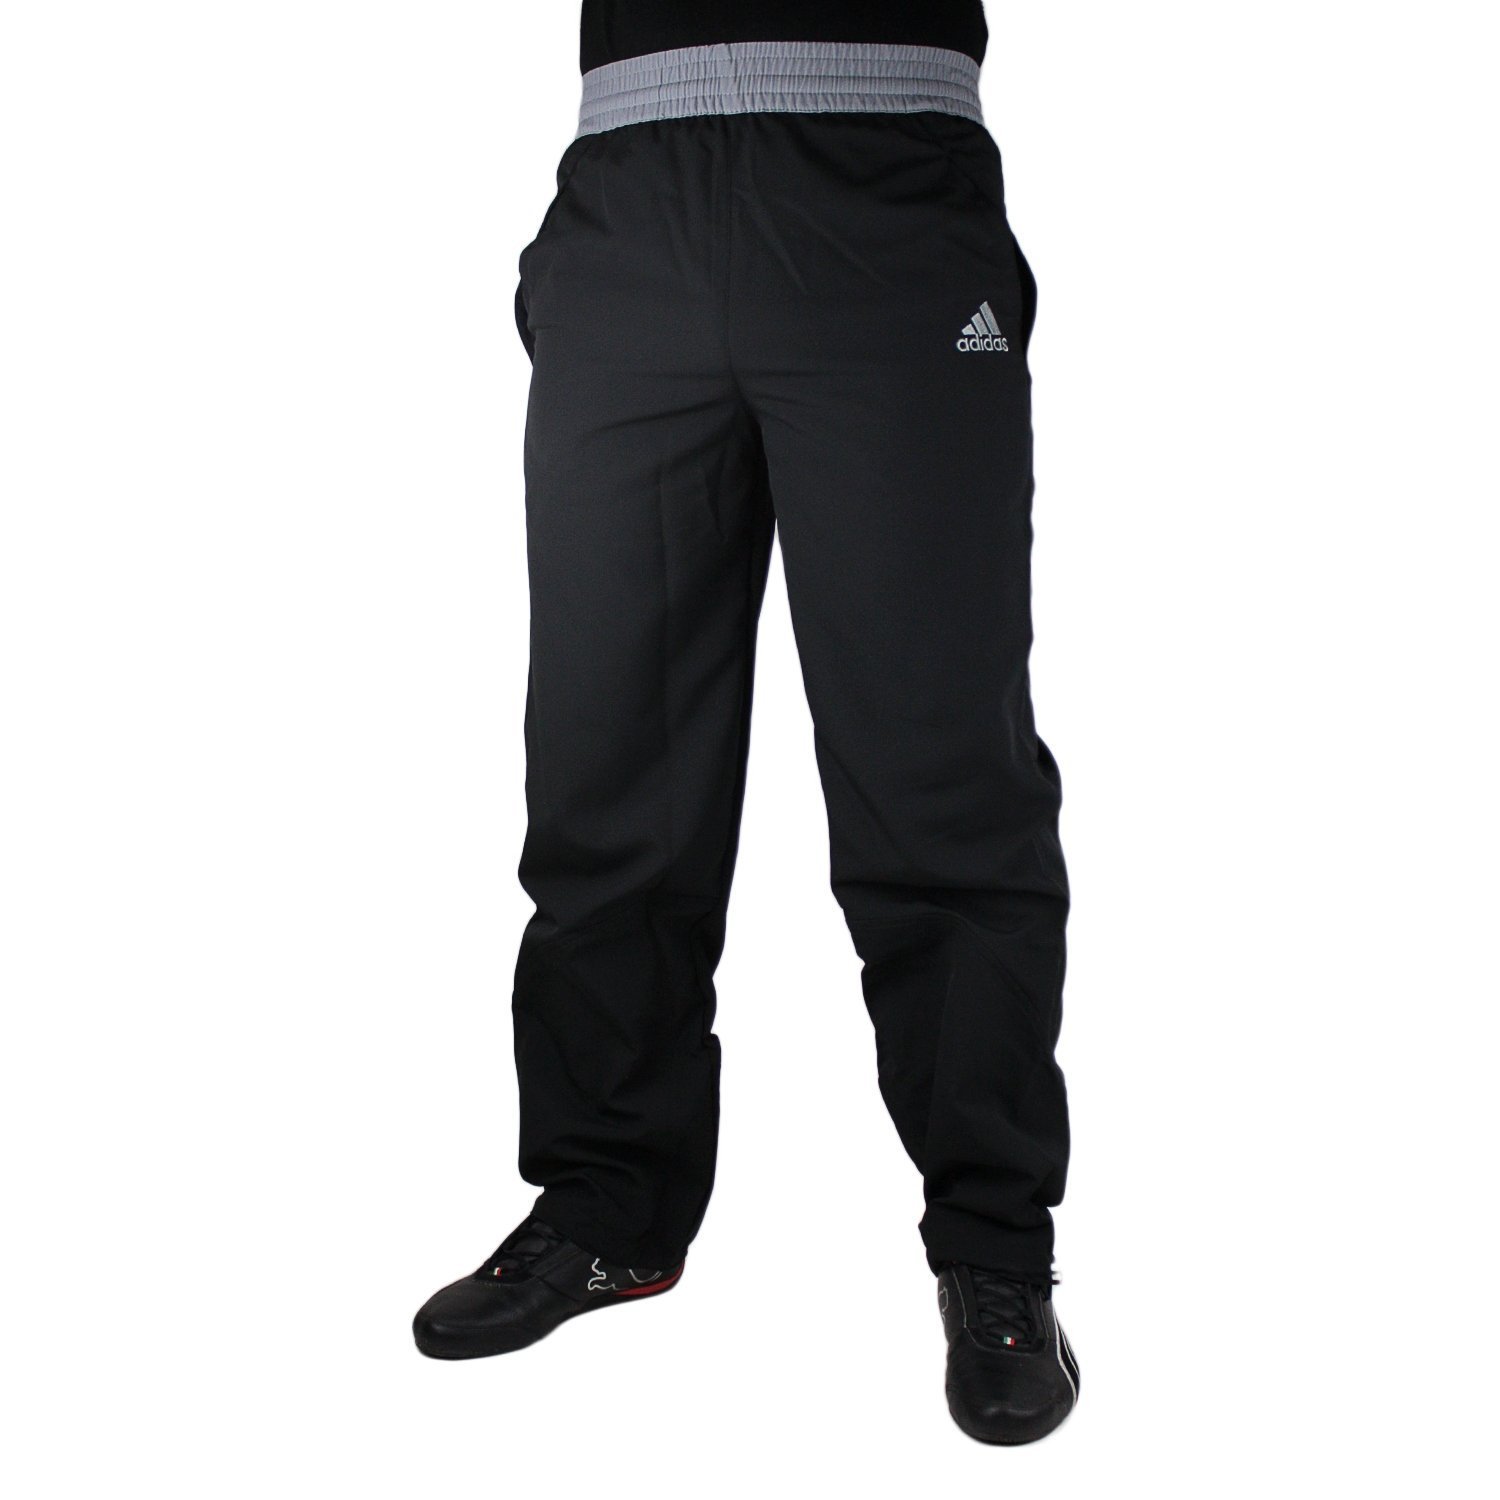 Adidas CrazyGhost Pants - Black/Grey (Mens) - image 1 of 2